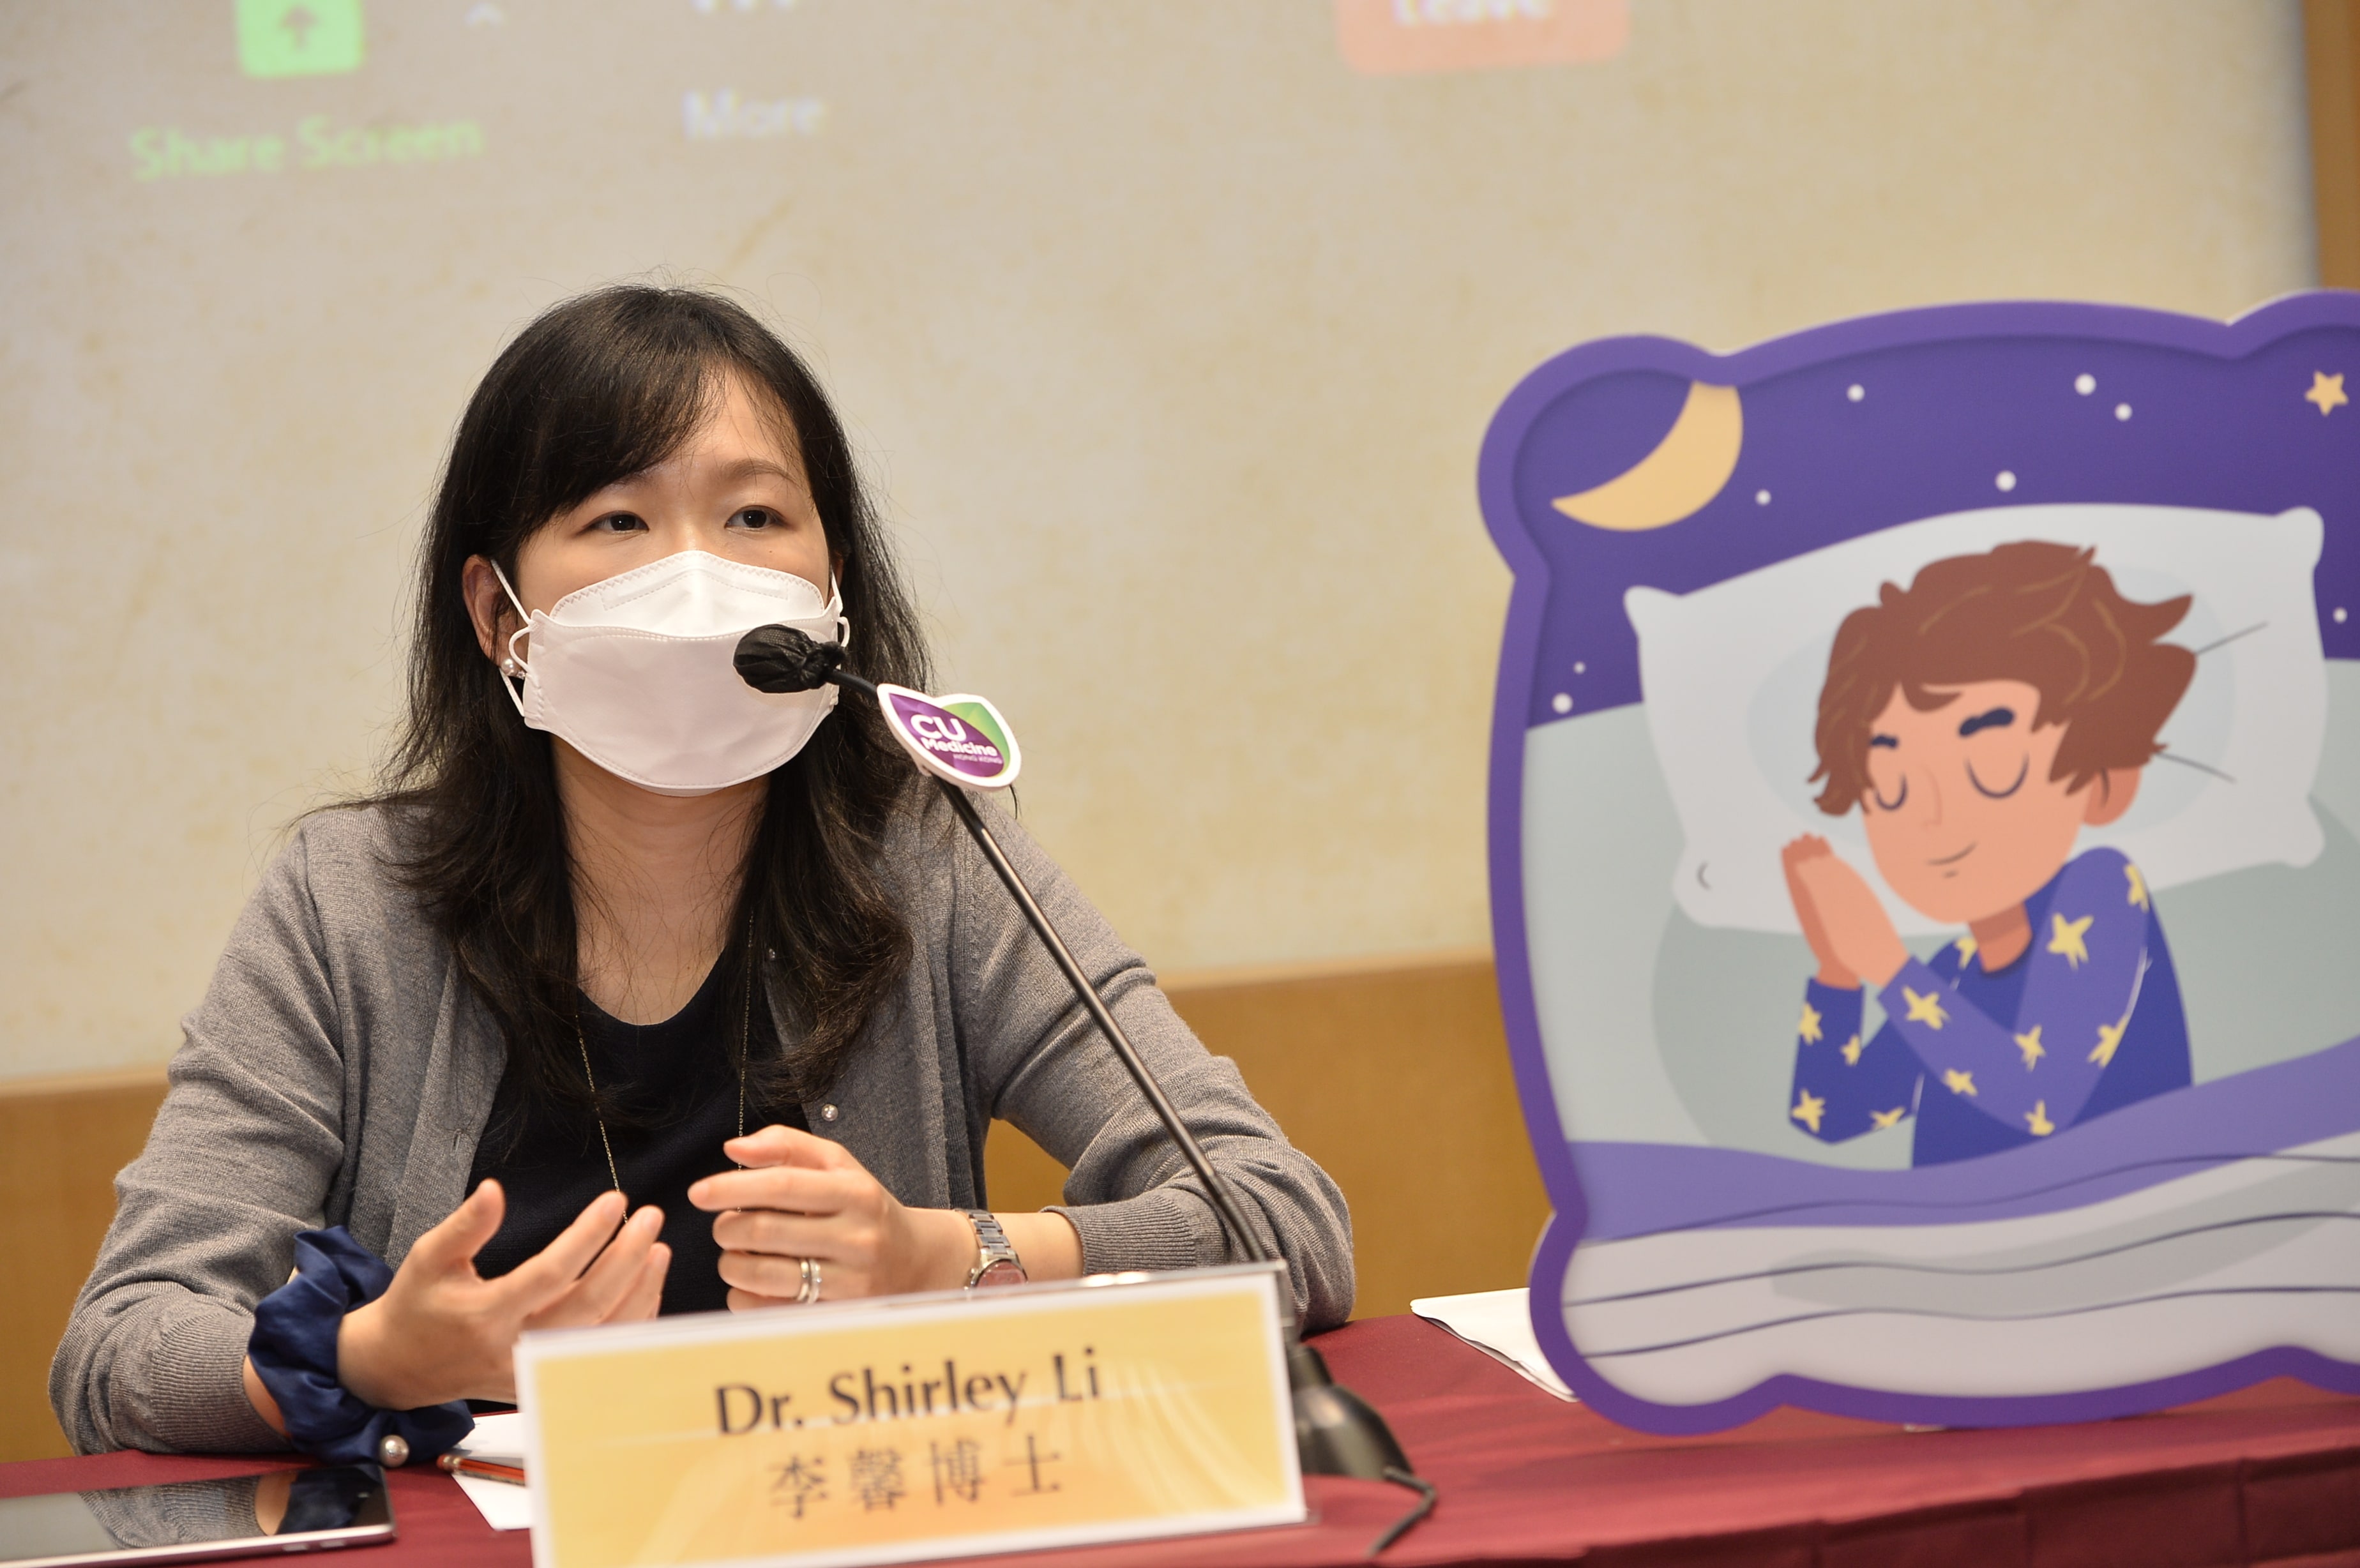 Dr. Shirley Li